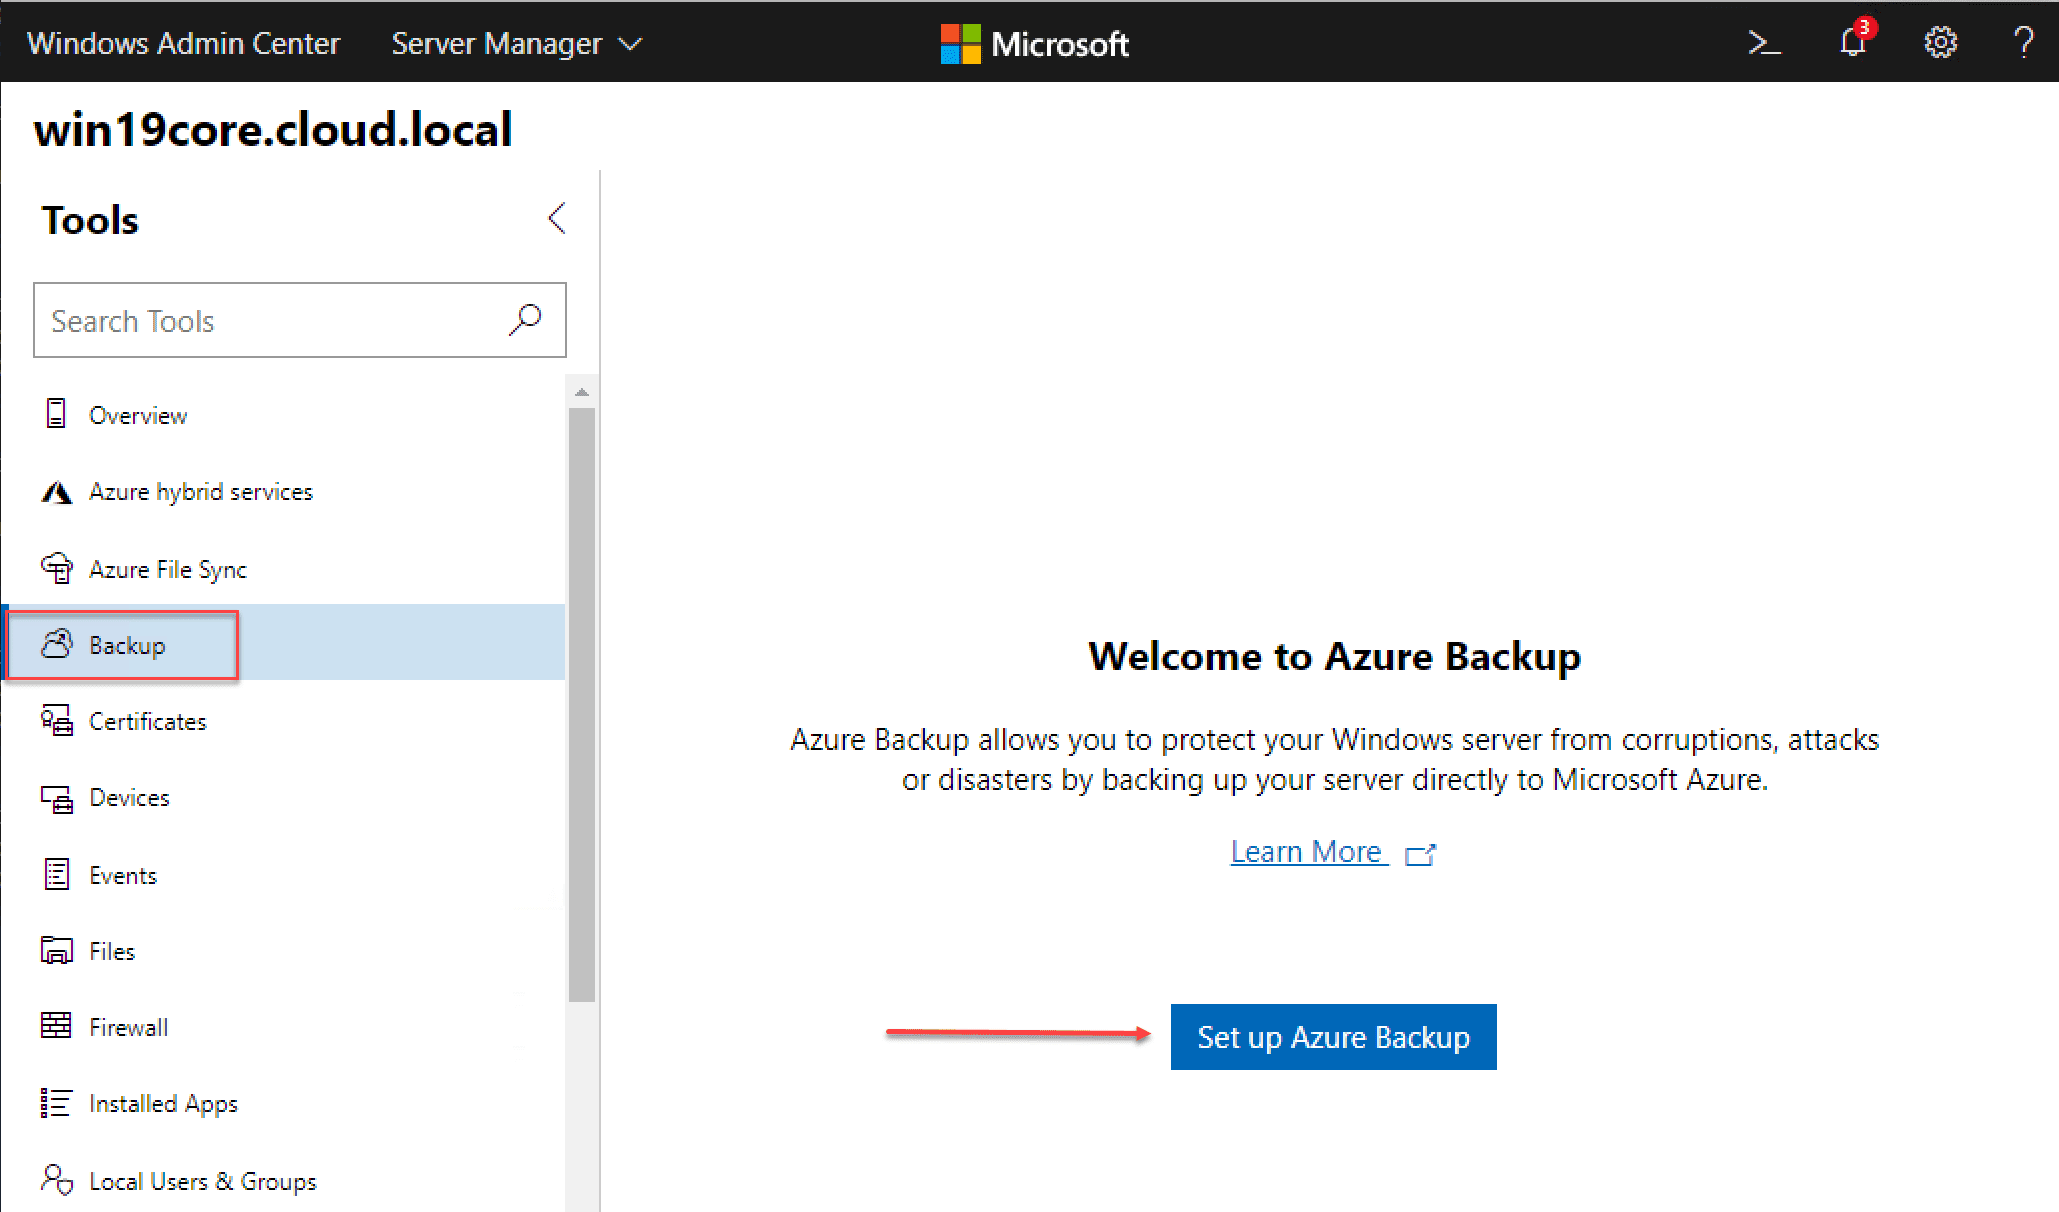 Configure-Azure-Backup-from-Windows-Admin-Center